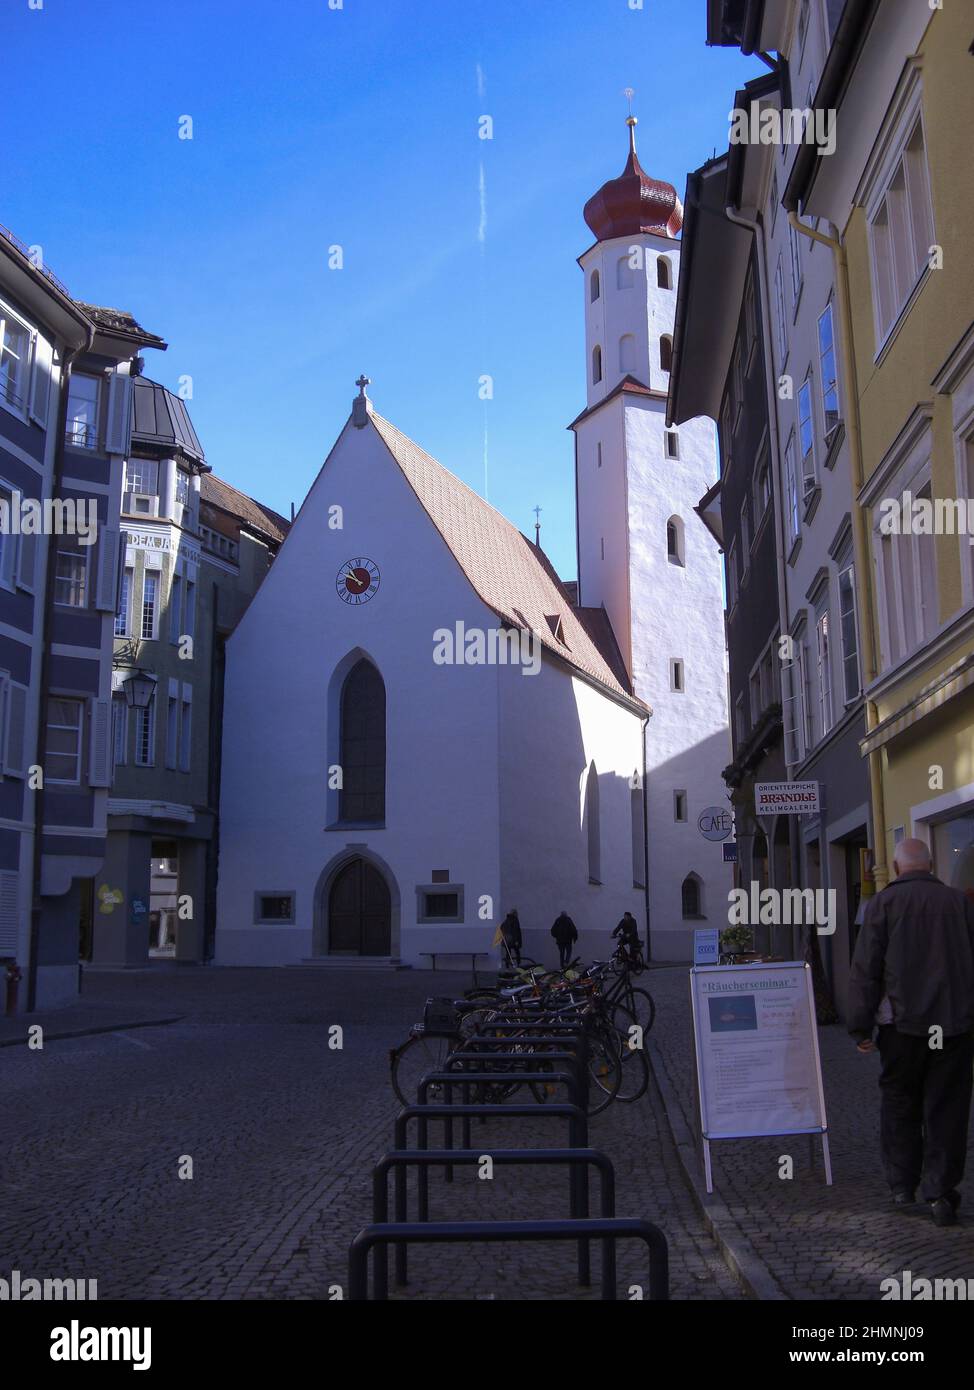 Feldkirch altstadt -Fotos und -Bildmaterial in hoher Auflösung – Alamy